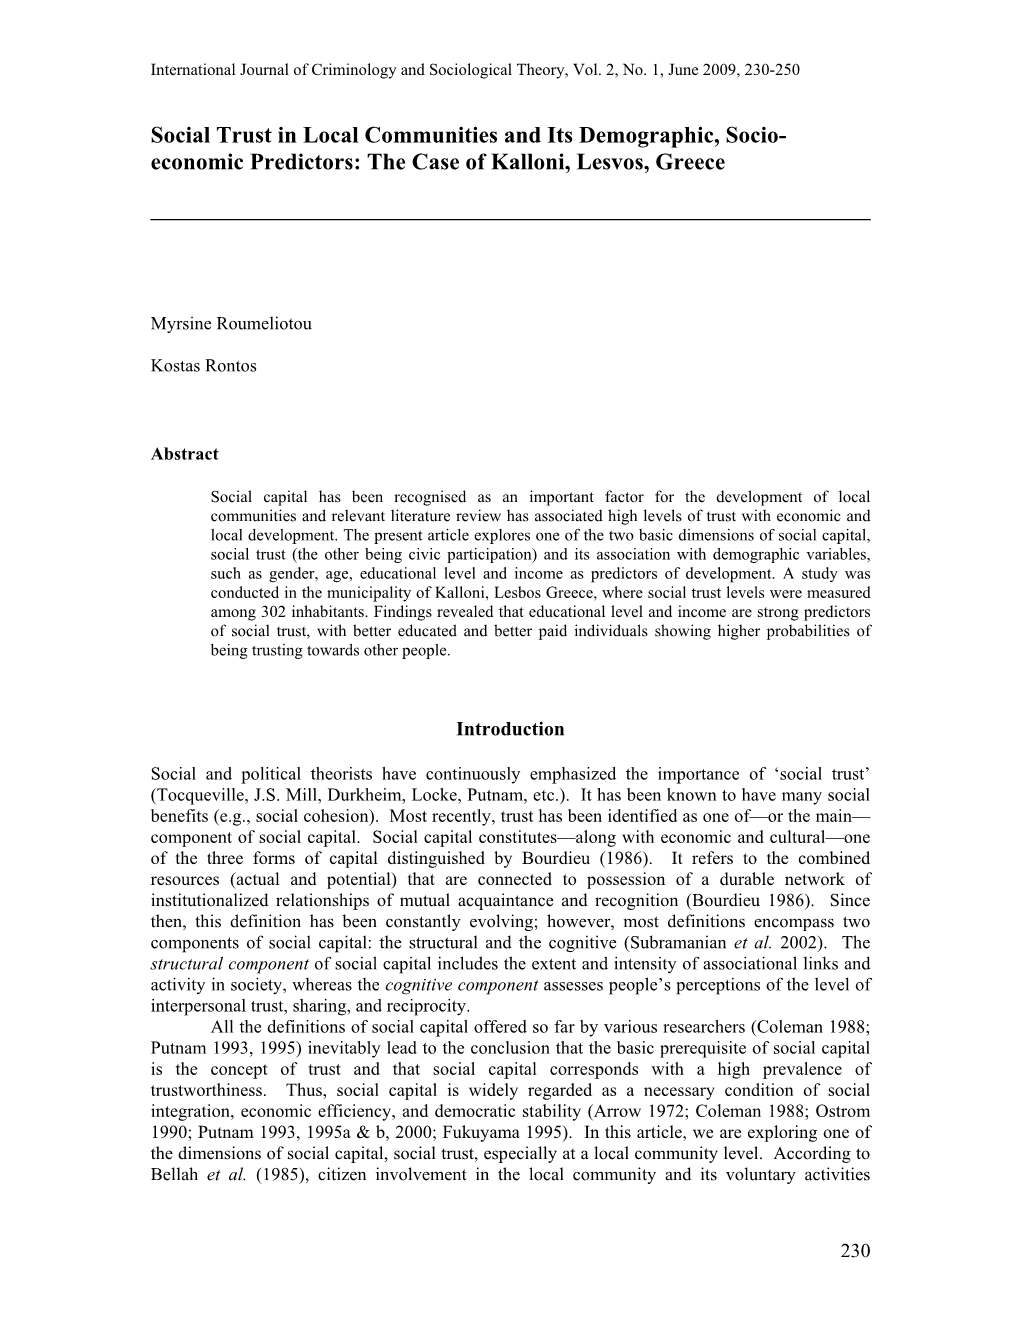 Social Trust in Local Communities and Its Demographic, Socio- Economic Predictors: the Case of Kalloni, Lesvos, Greece